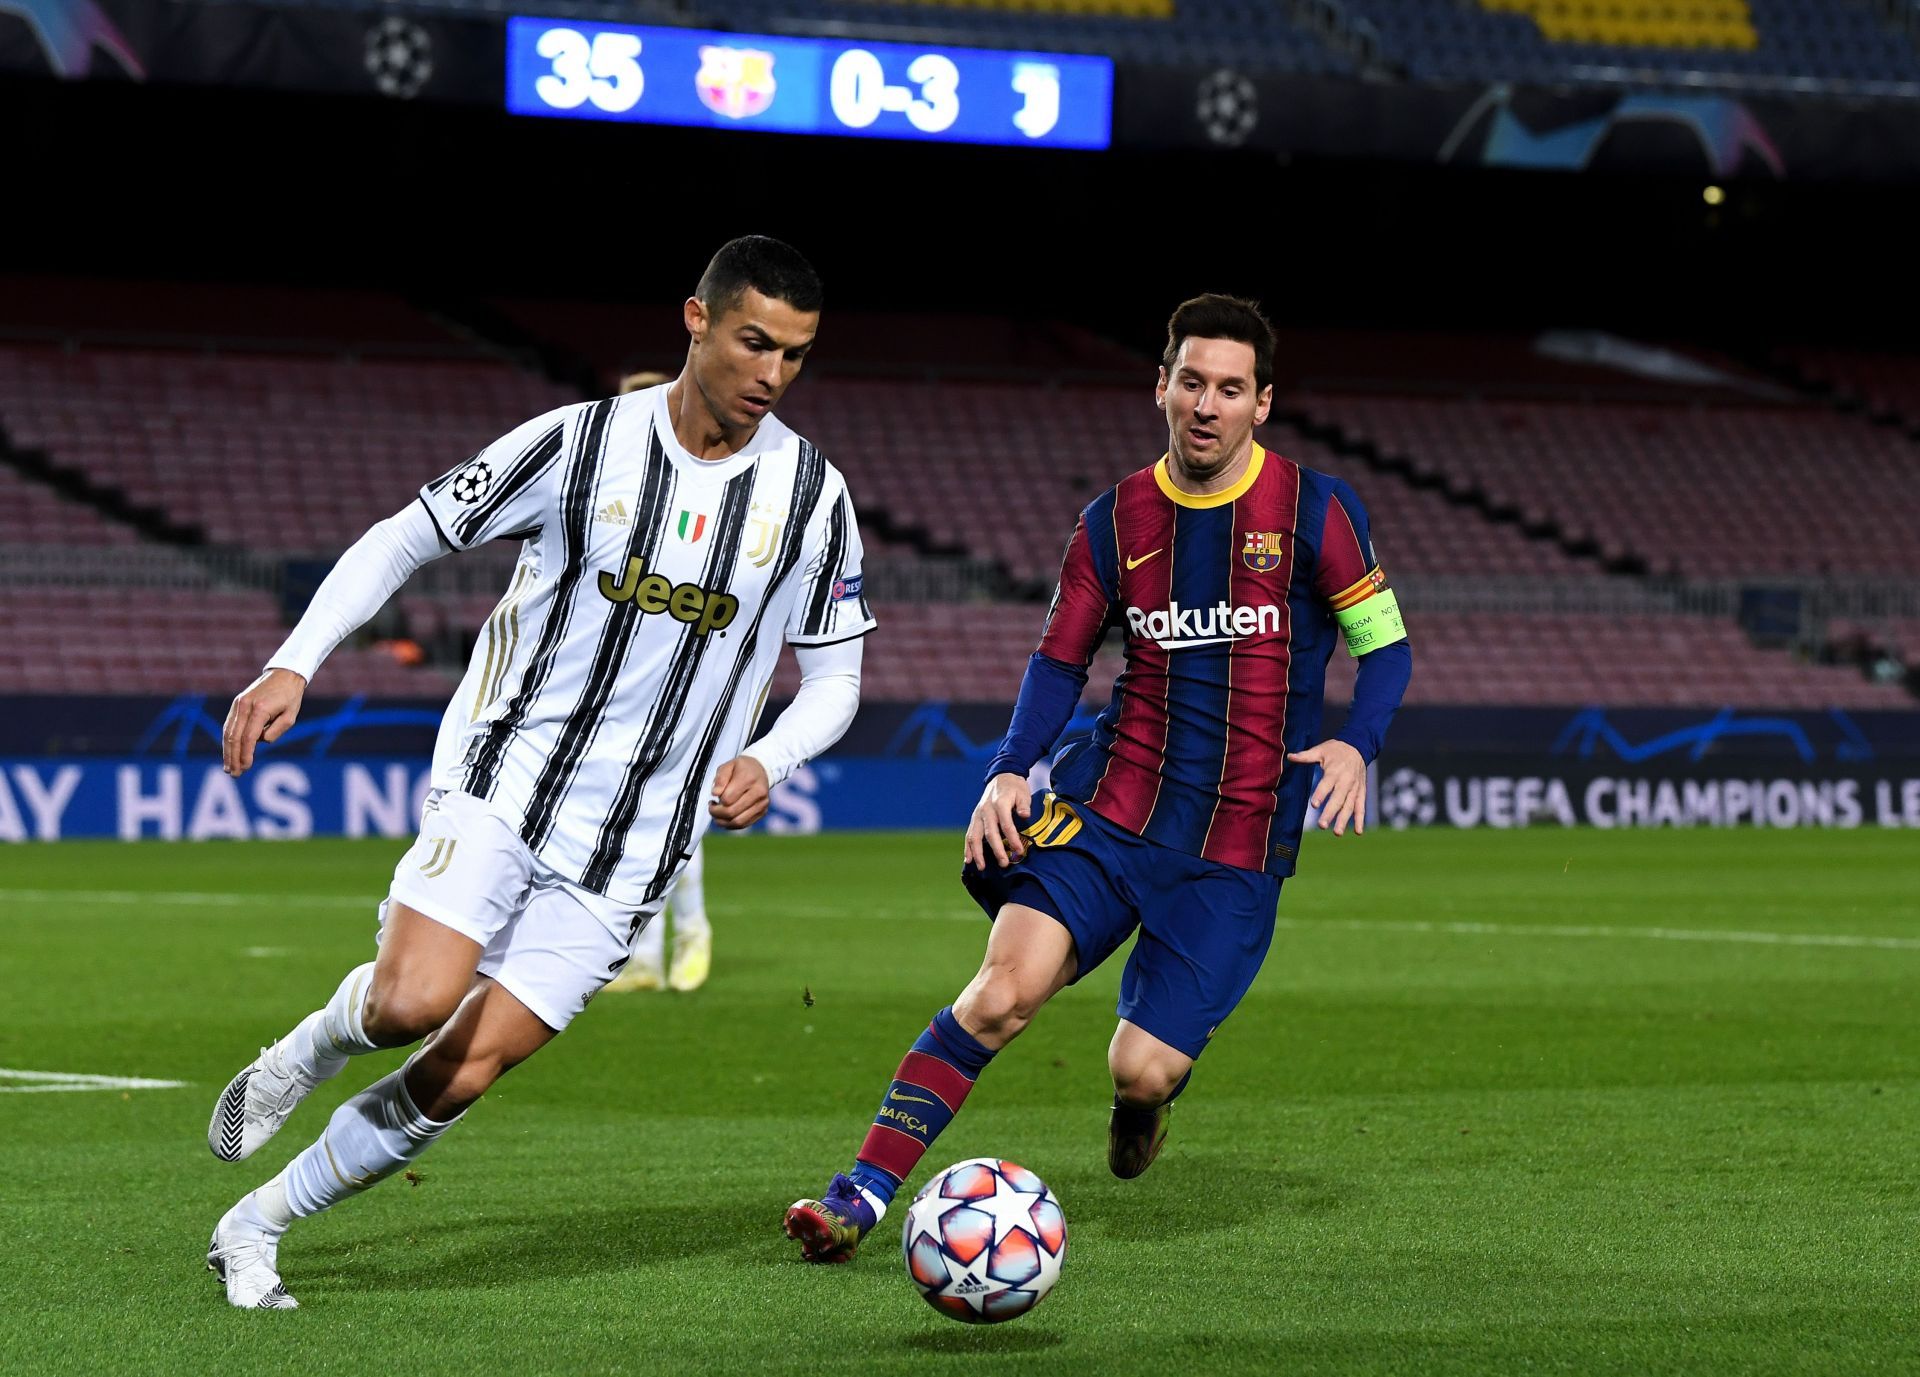 Ronaldo (left) and Messi